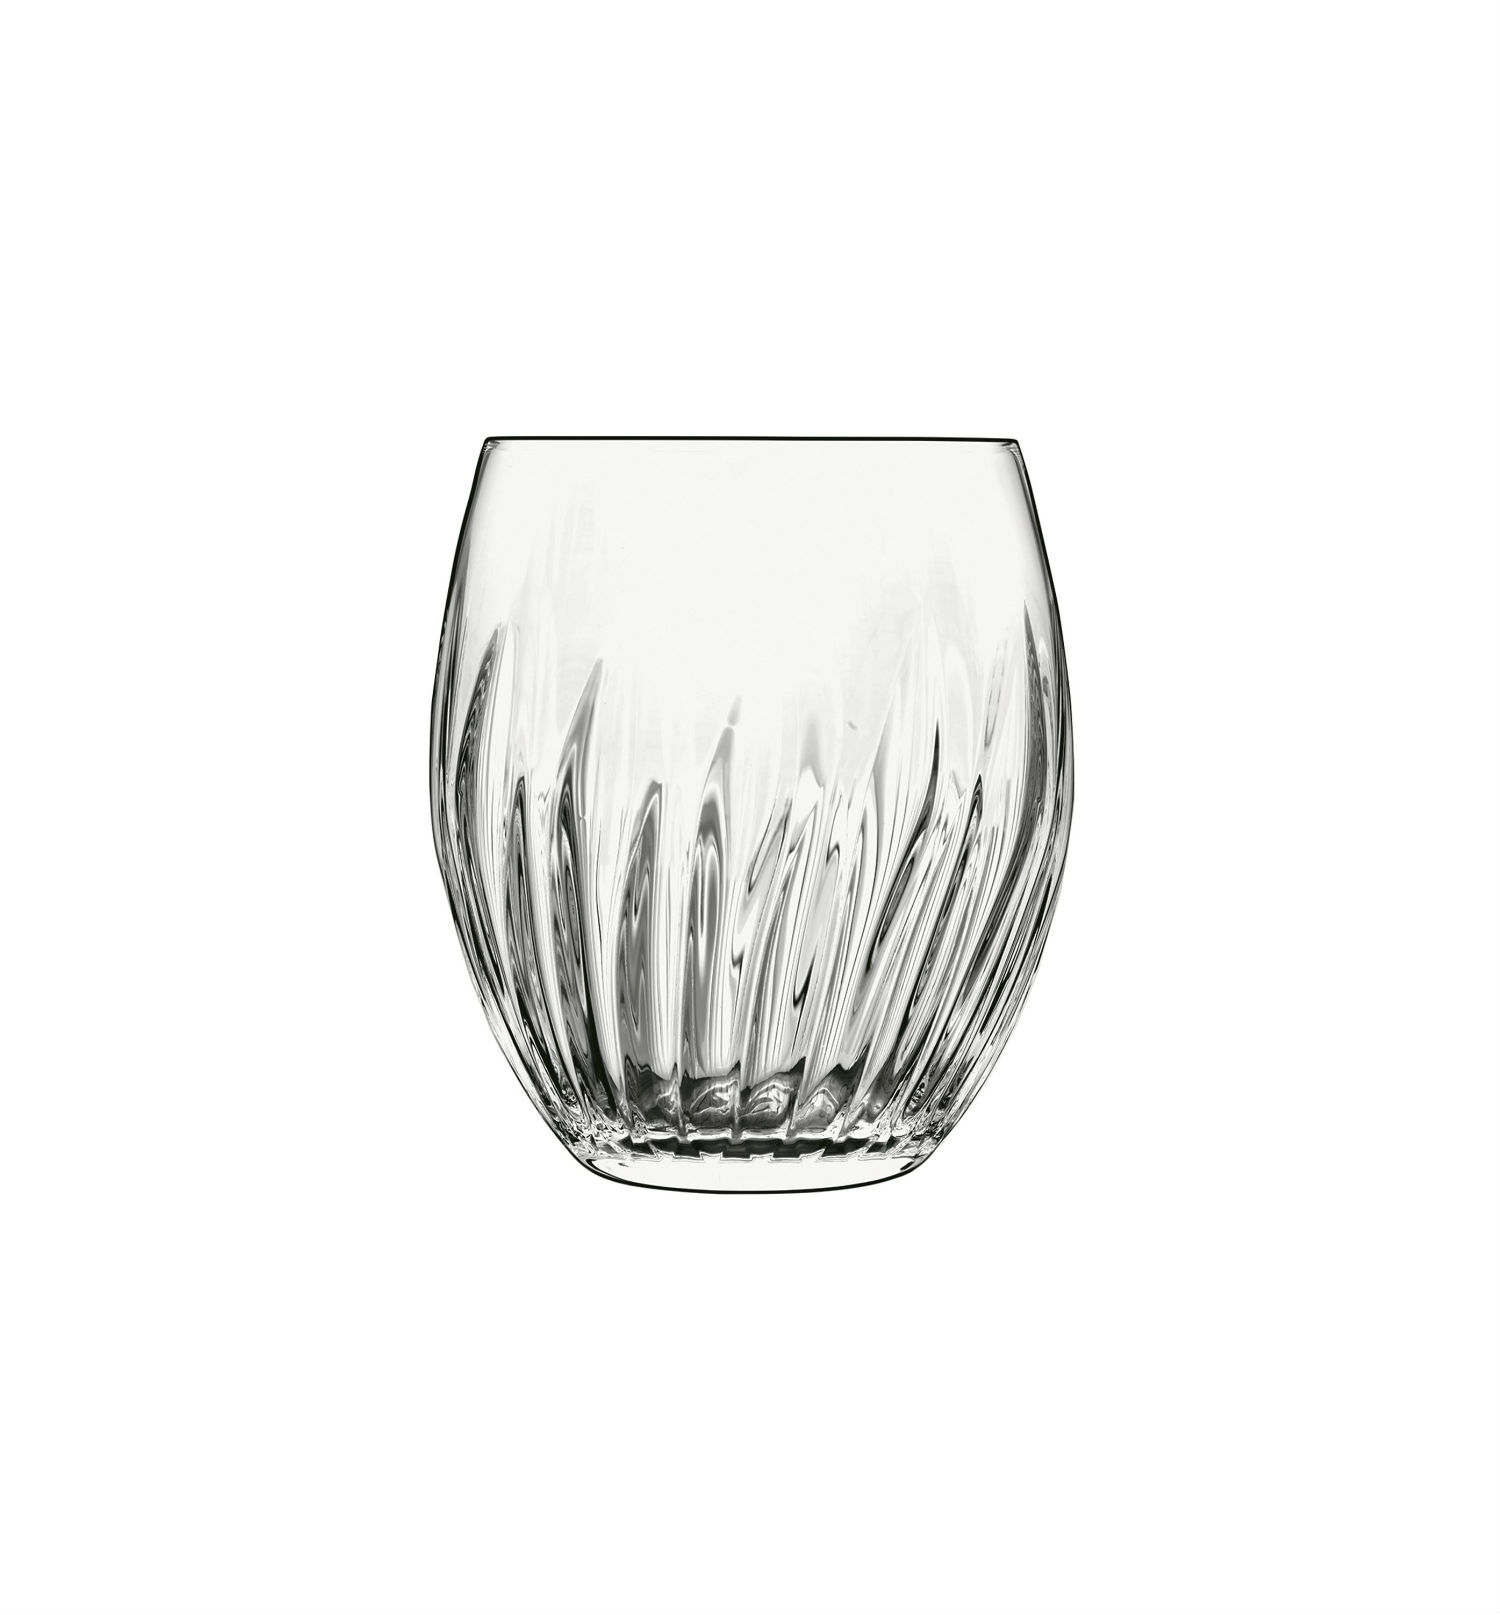 Mixology Vand/Whiskyglas